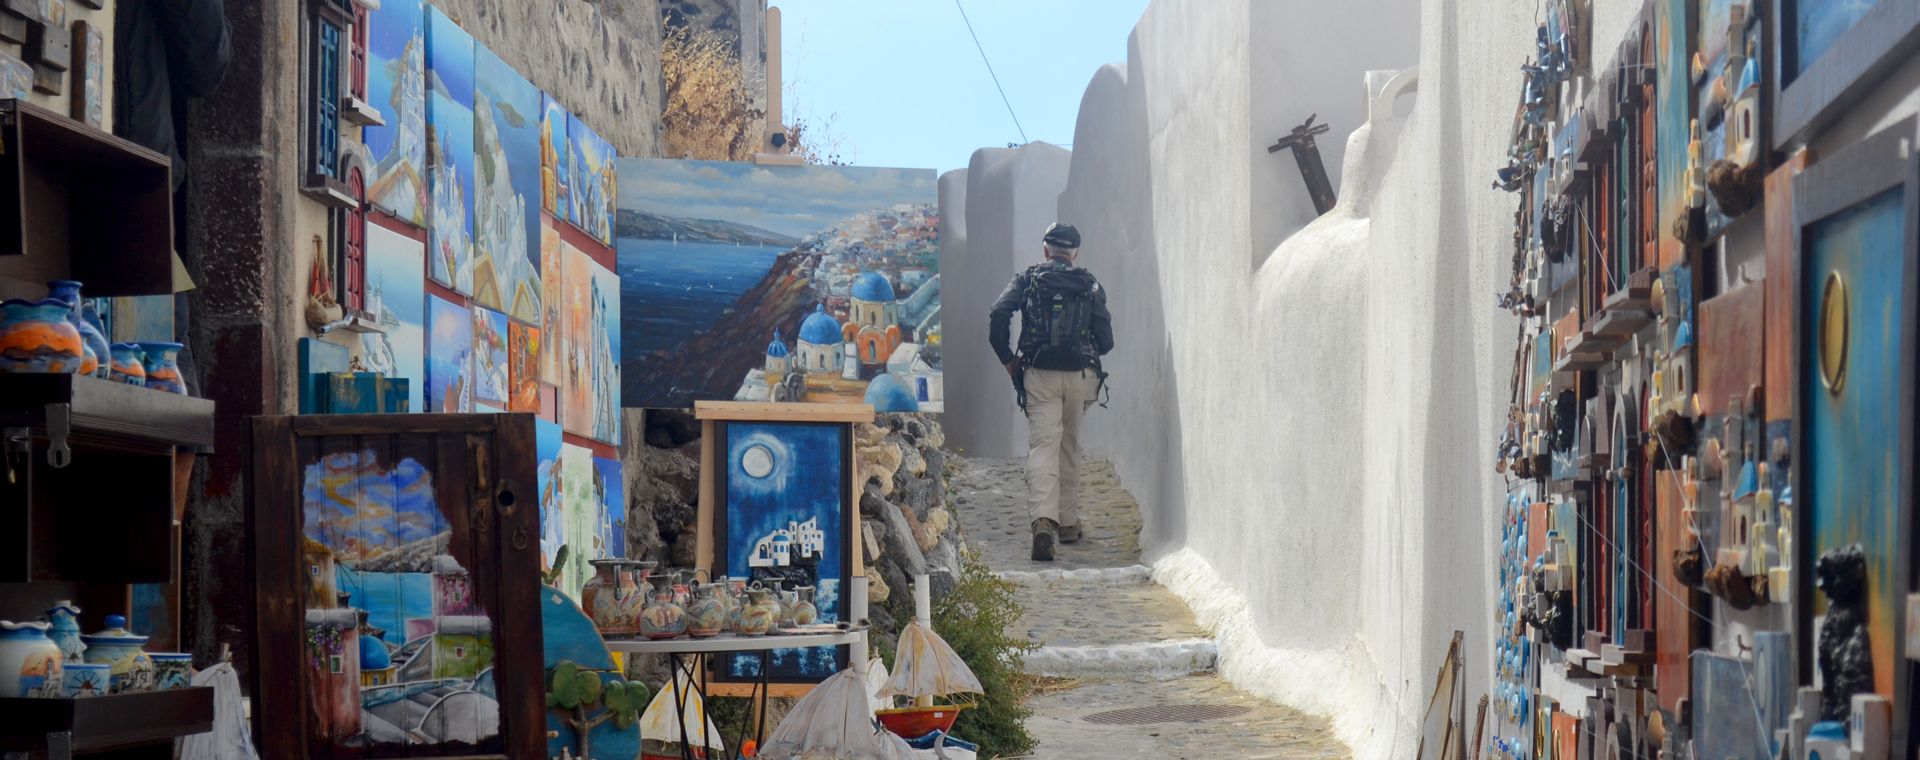 Hike through the alleys of Santorini